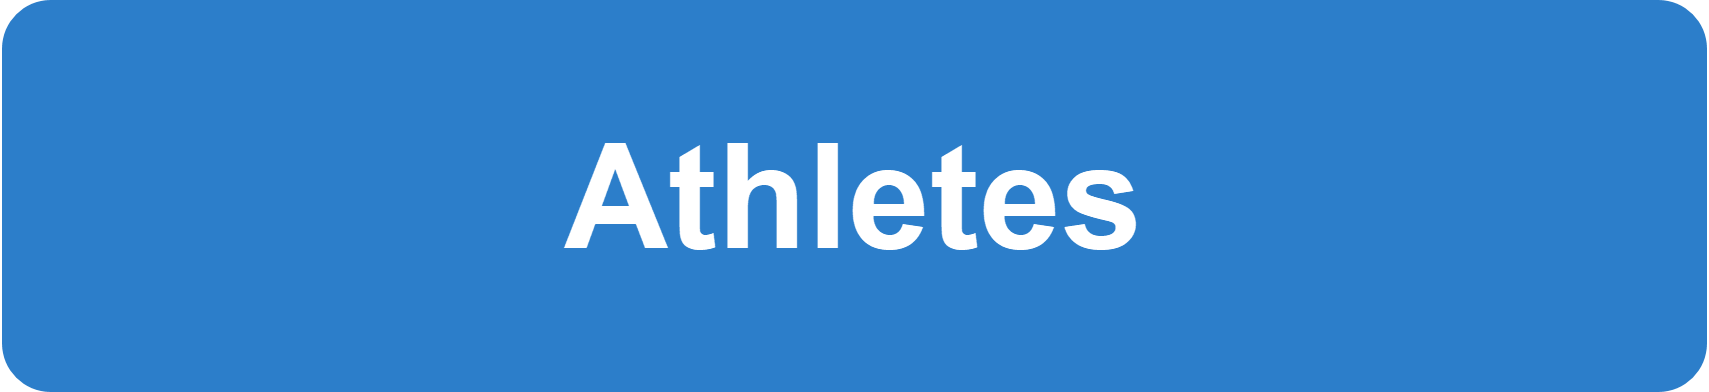 Athletes